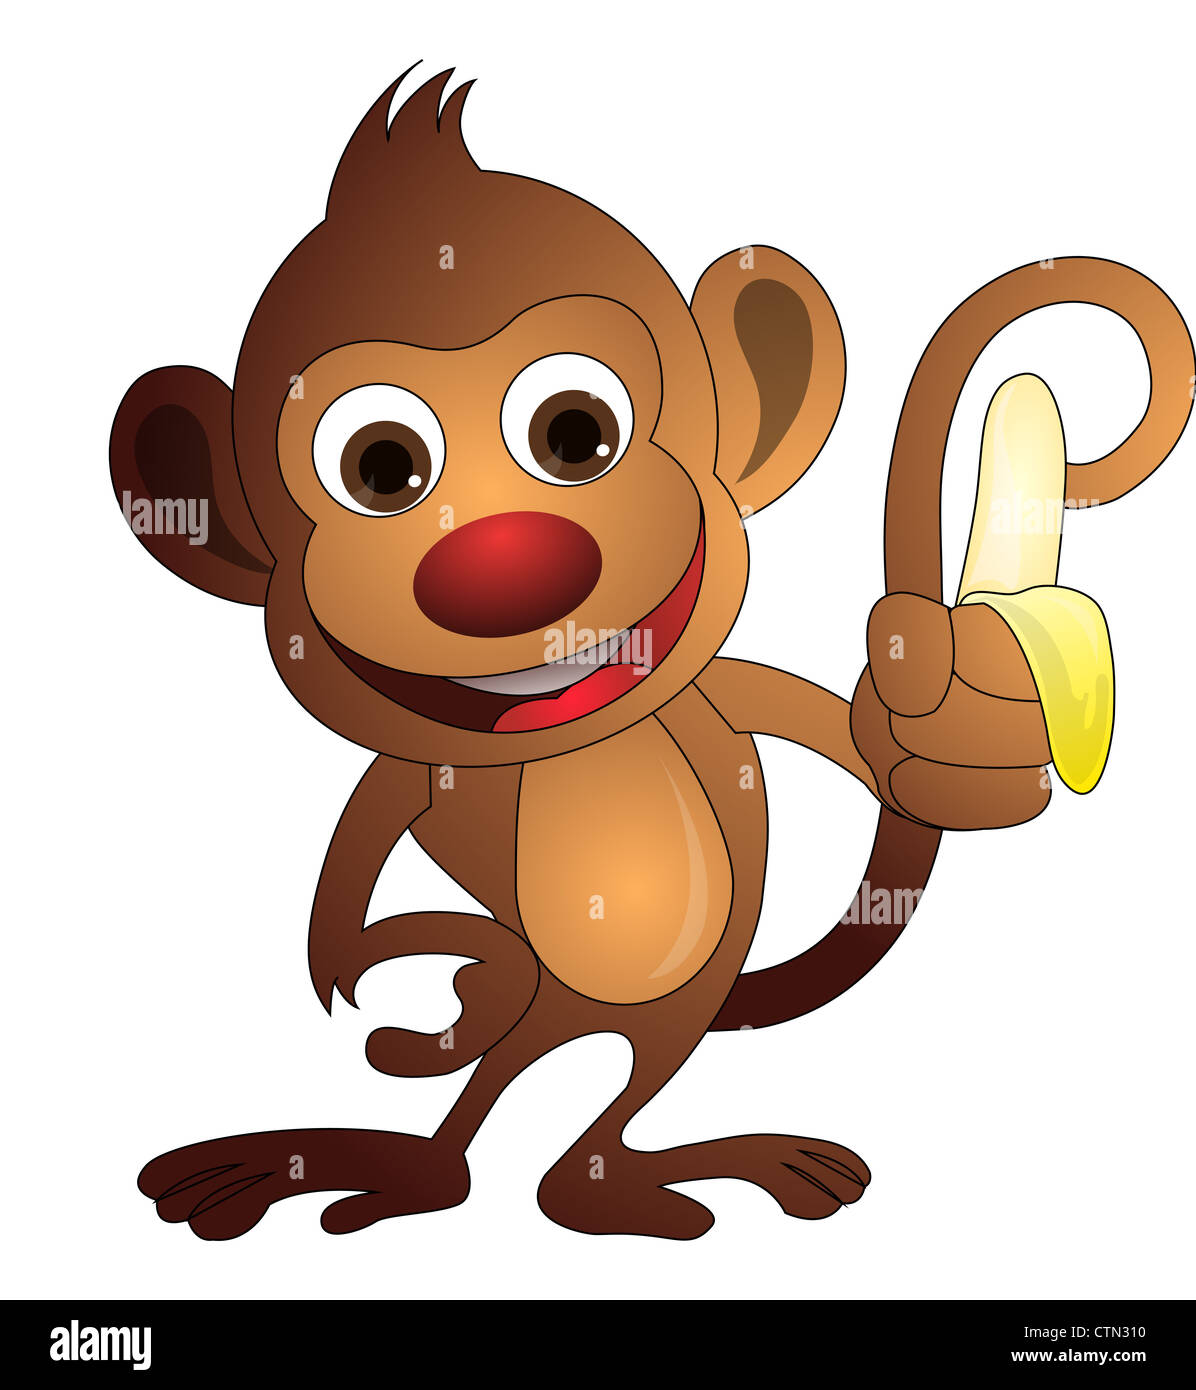 Monkey, Brown, Holding a Banana, vector illustration Stock Photo